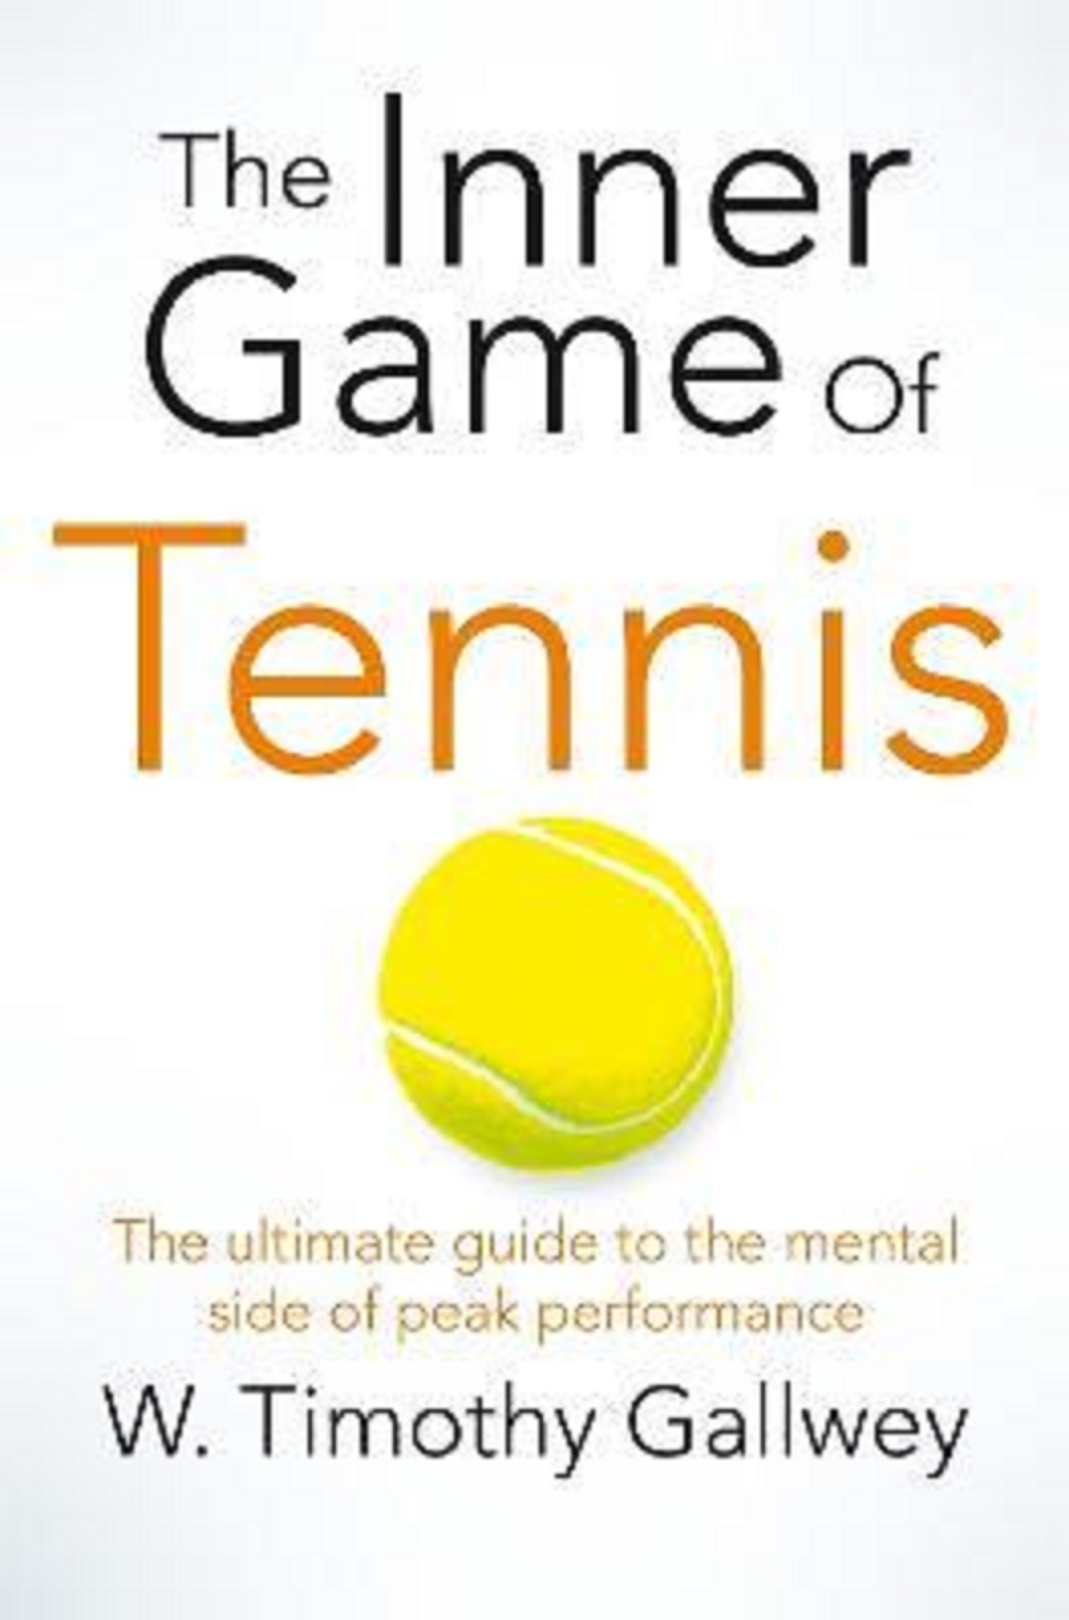 Coperta cărții: The Inner Game of Tennis - lonnieyoungblood.com